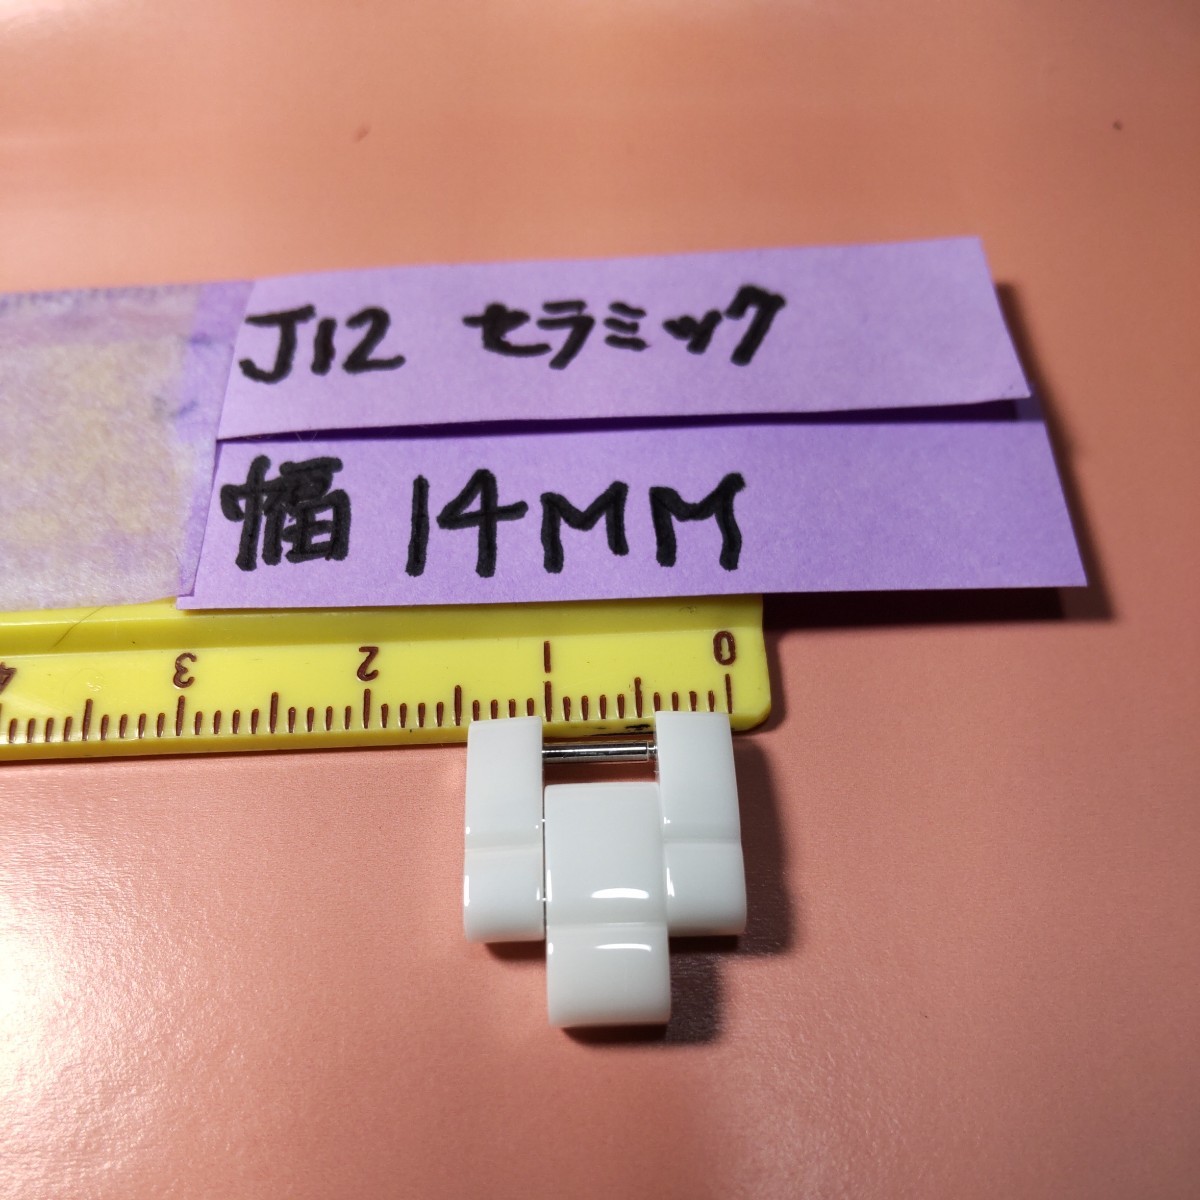 CHANEL J12 ベルト ブレスレット 調整 駒 セラミック 白 ベルト 1.5 コマ WH シャネル 純正品 14mm 正規品 未使用 レディース 付属品 ④